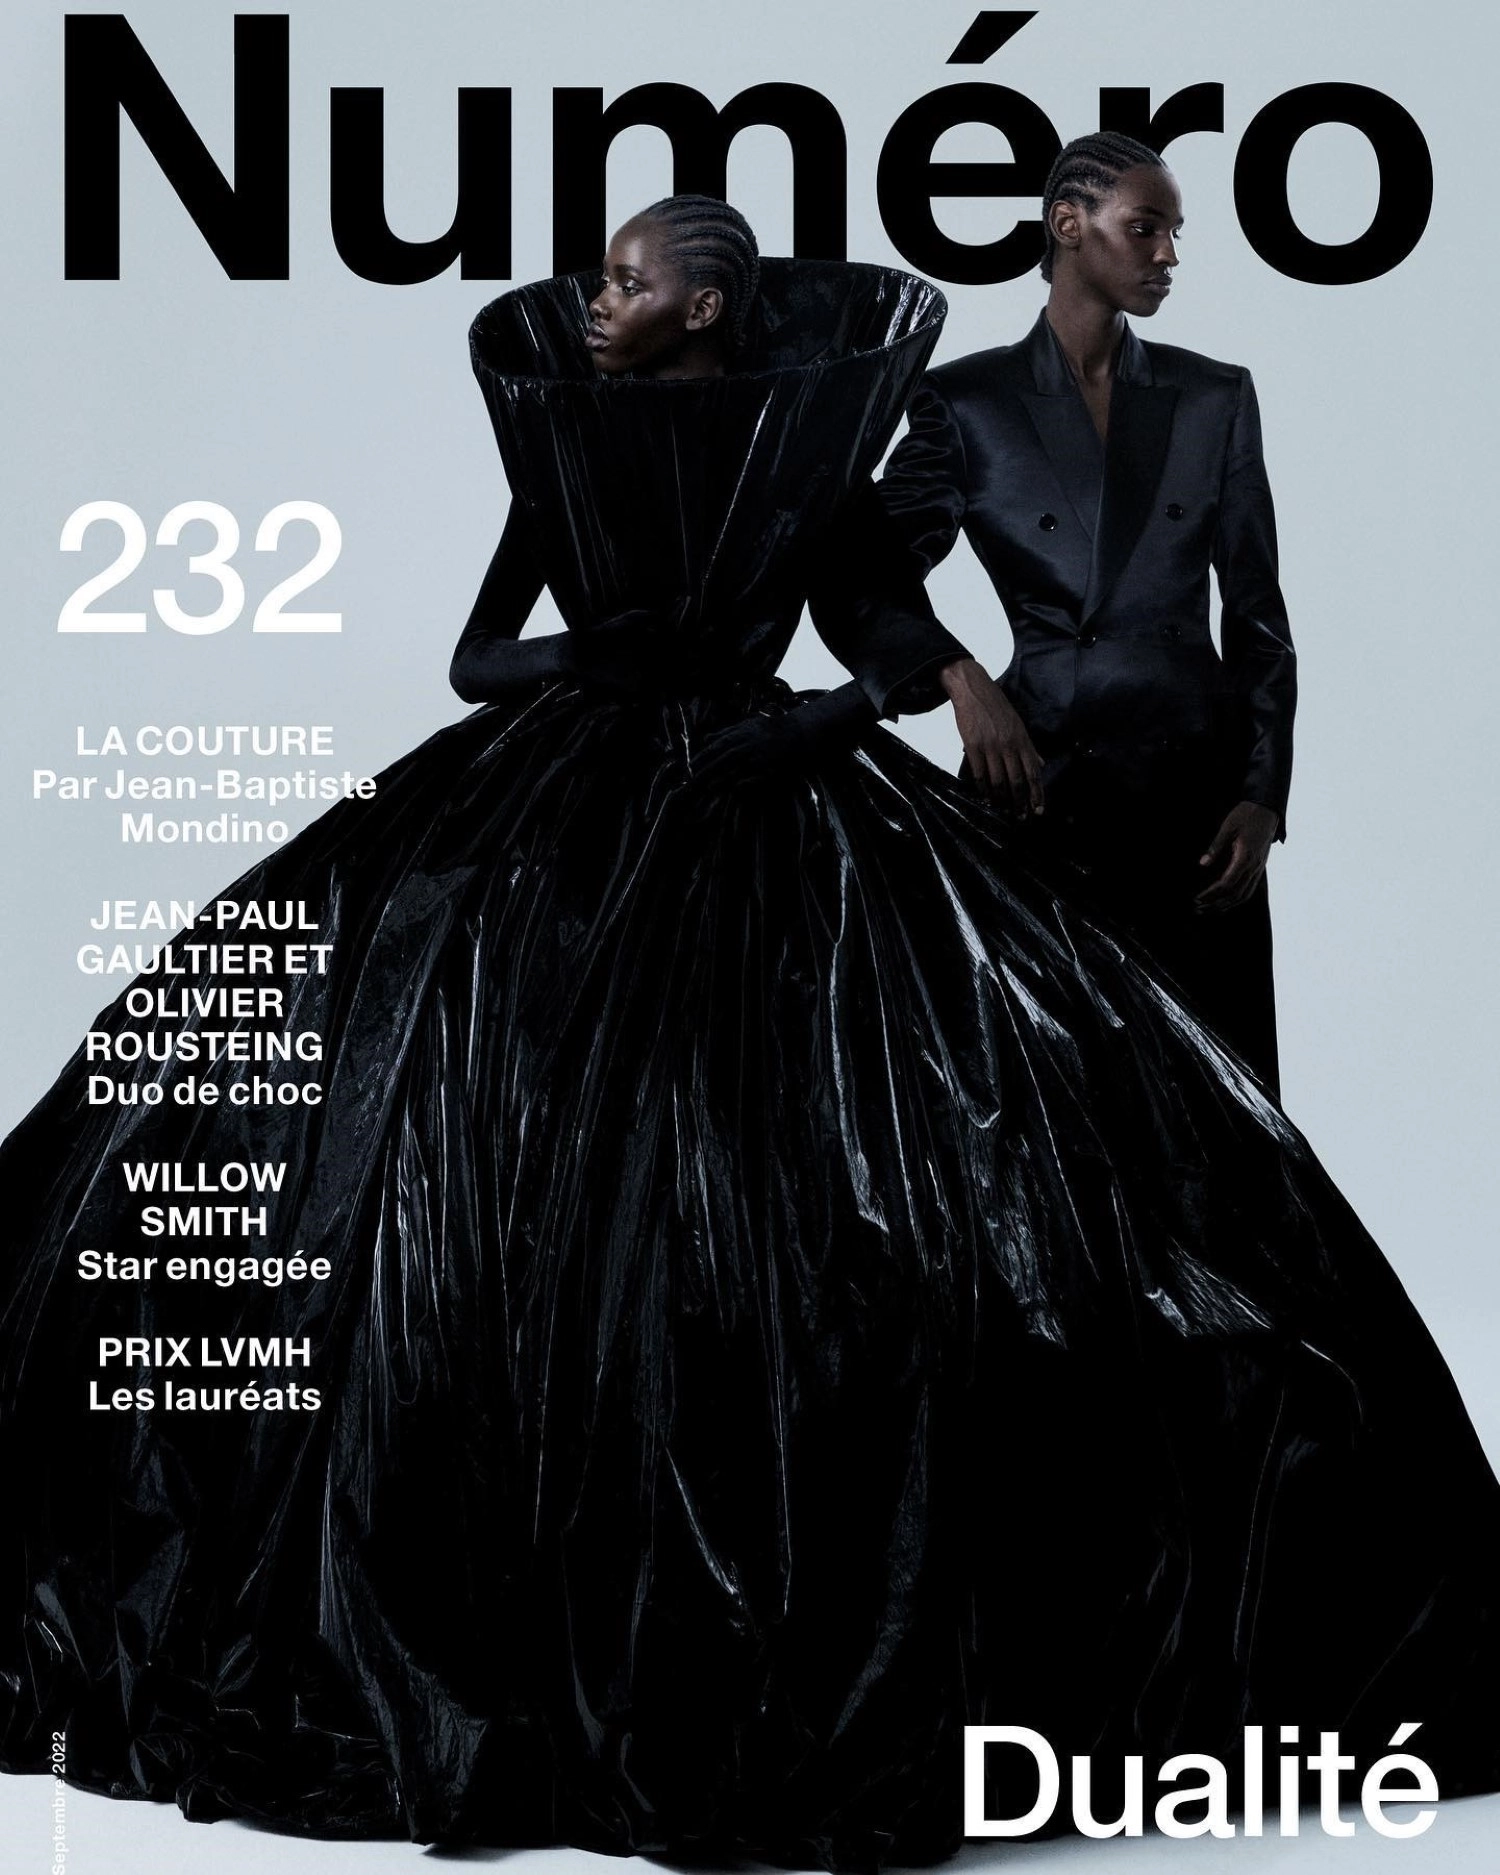 Numéro September 2022 covers by Jean-Baptiste Mondino